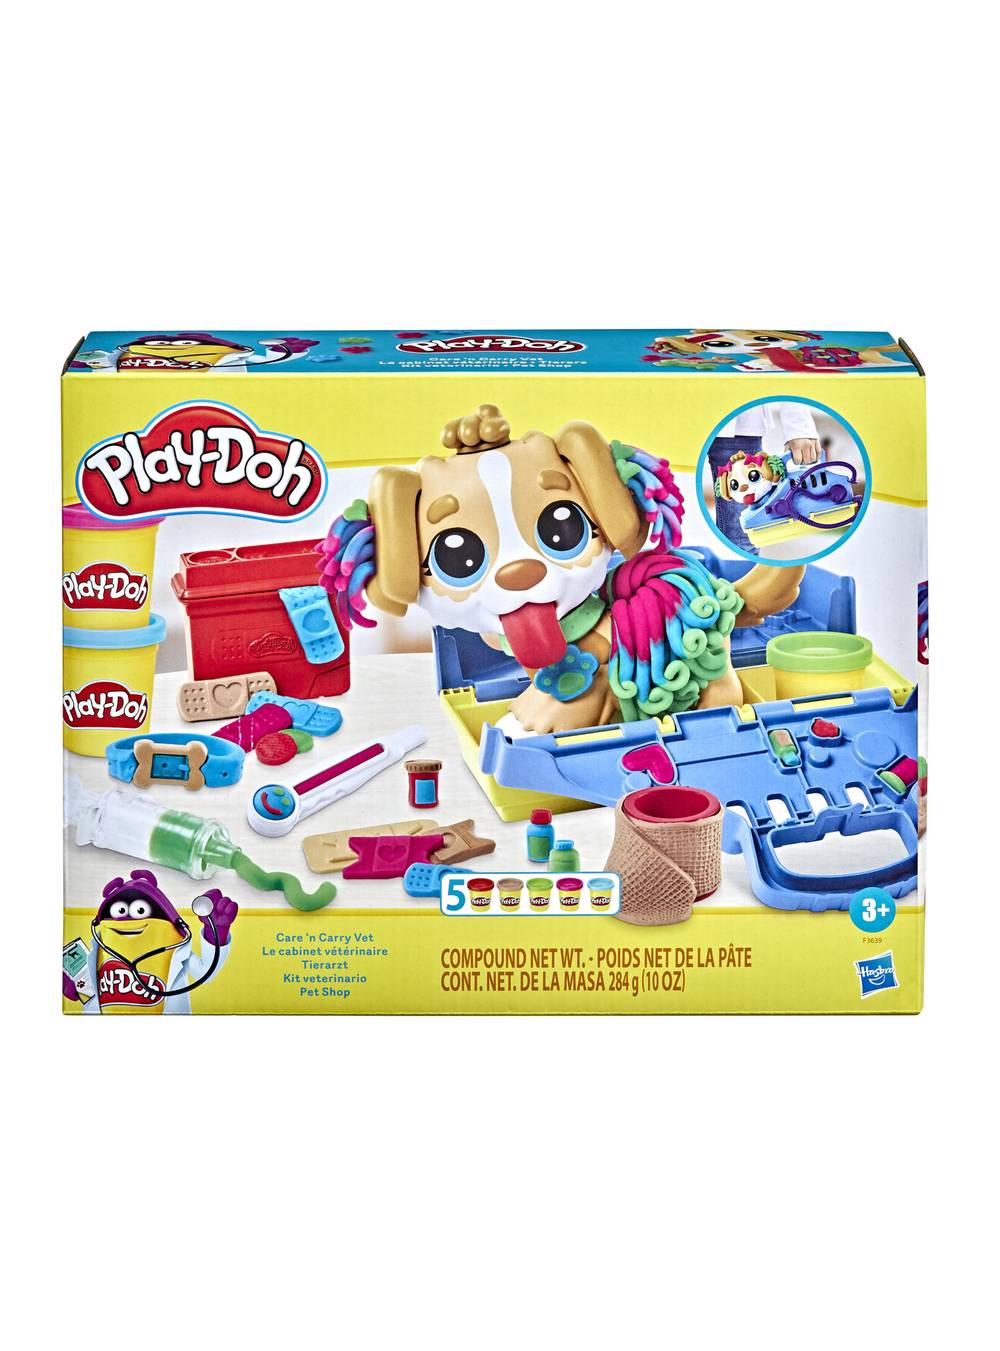 Play-doh care'n carry vet (1 u)